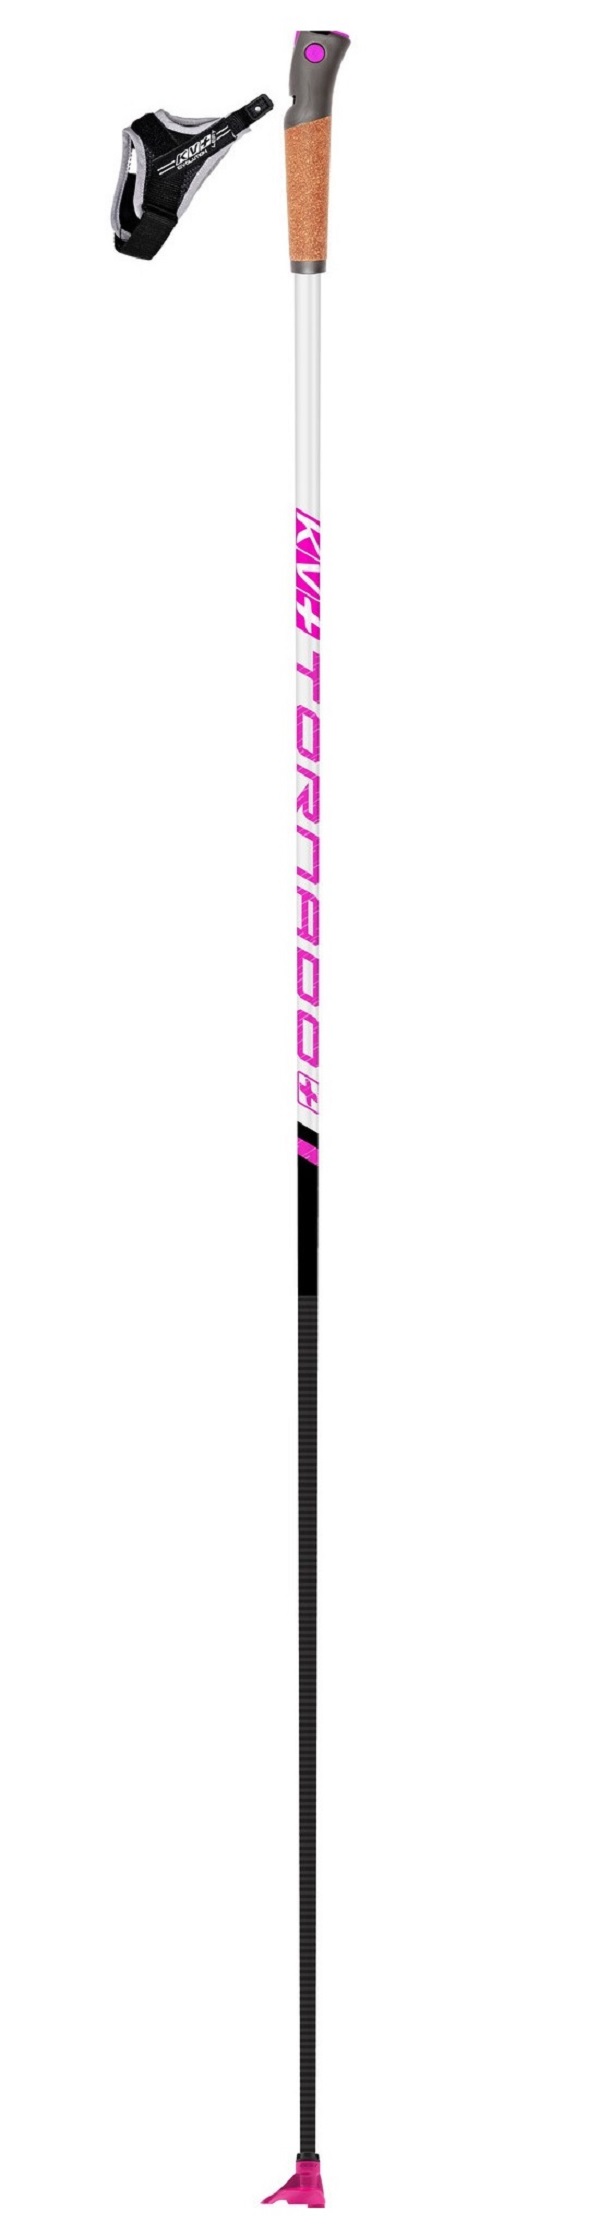 Лыжные палки KV+ Tornado plus jr pink qcd, 23P003JQP 120